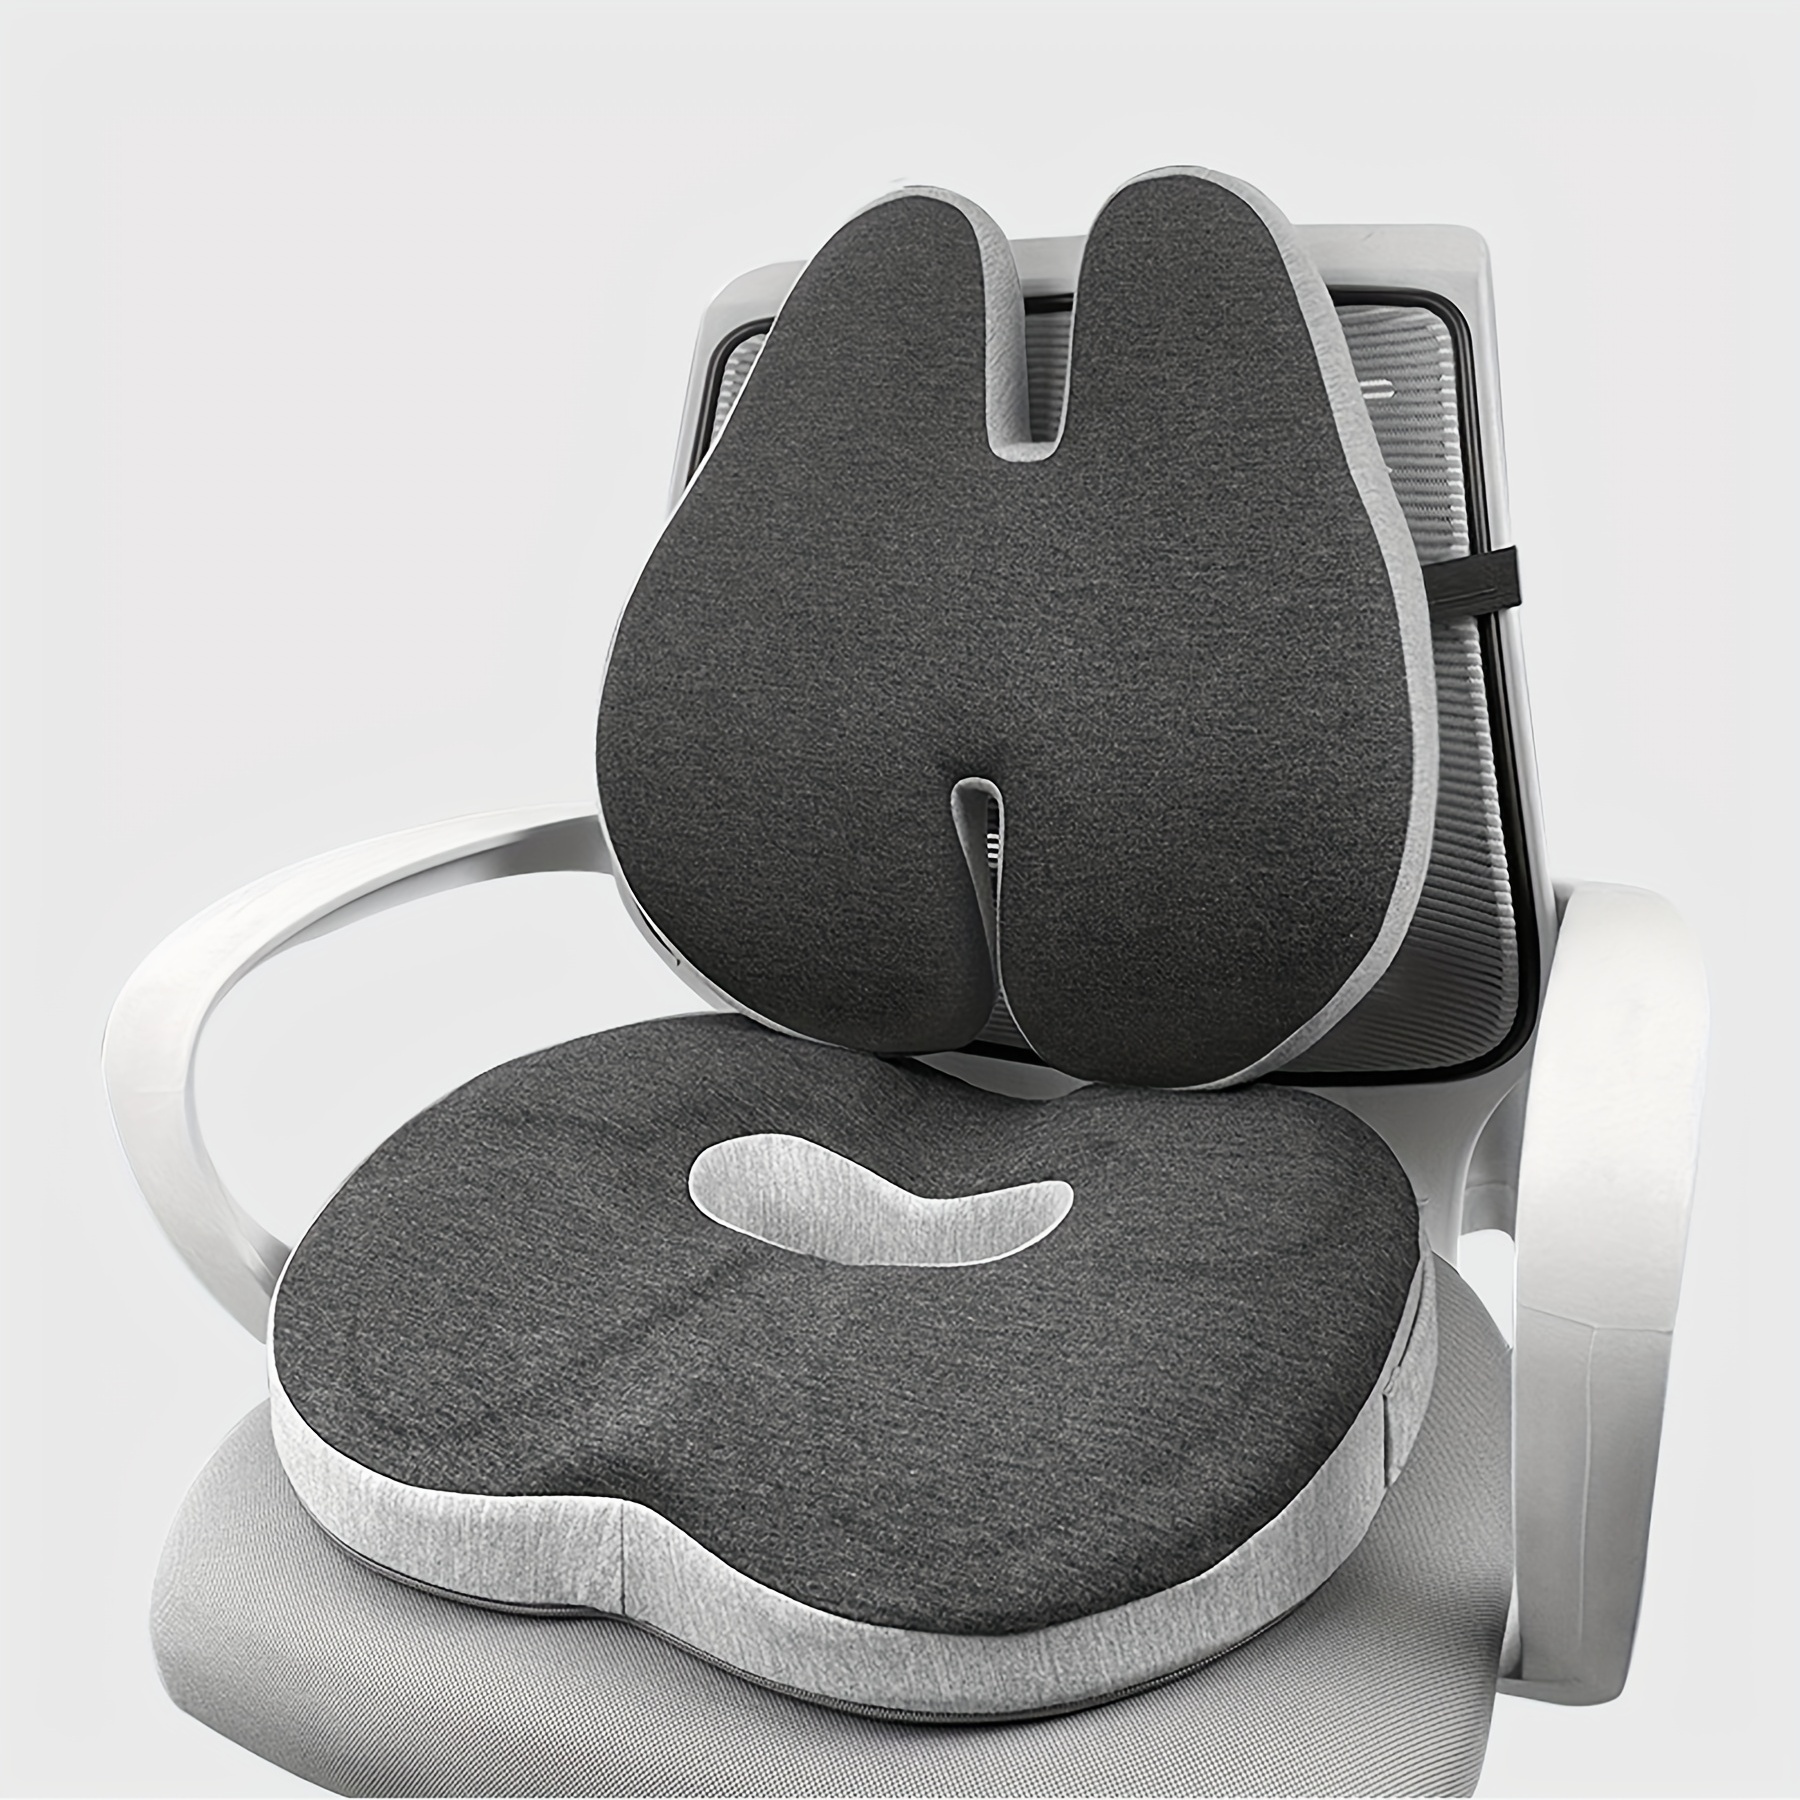 Donut Pillow,hemorrhoid Seat Cushion,car Seat Pad,for Long Sitting